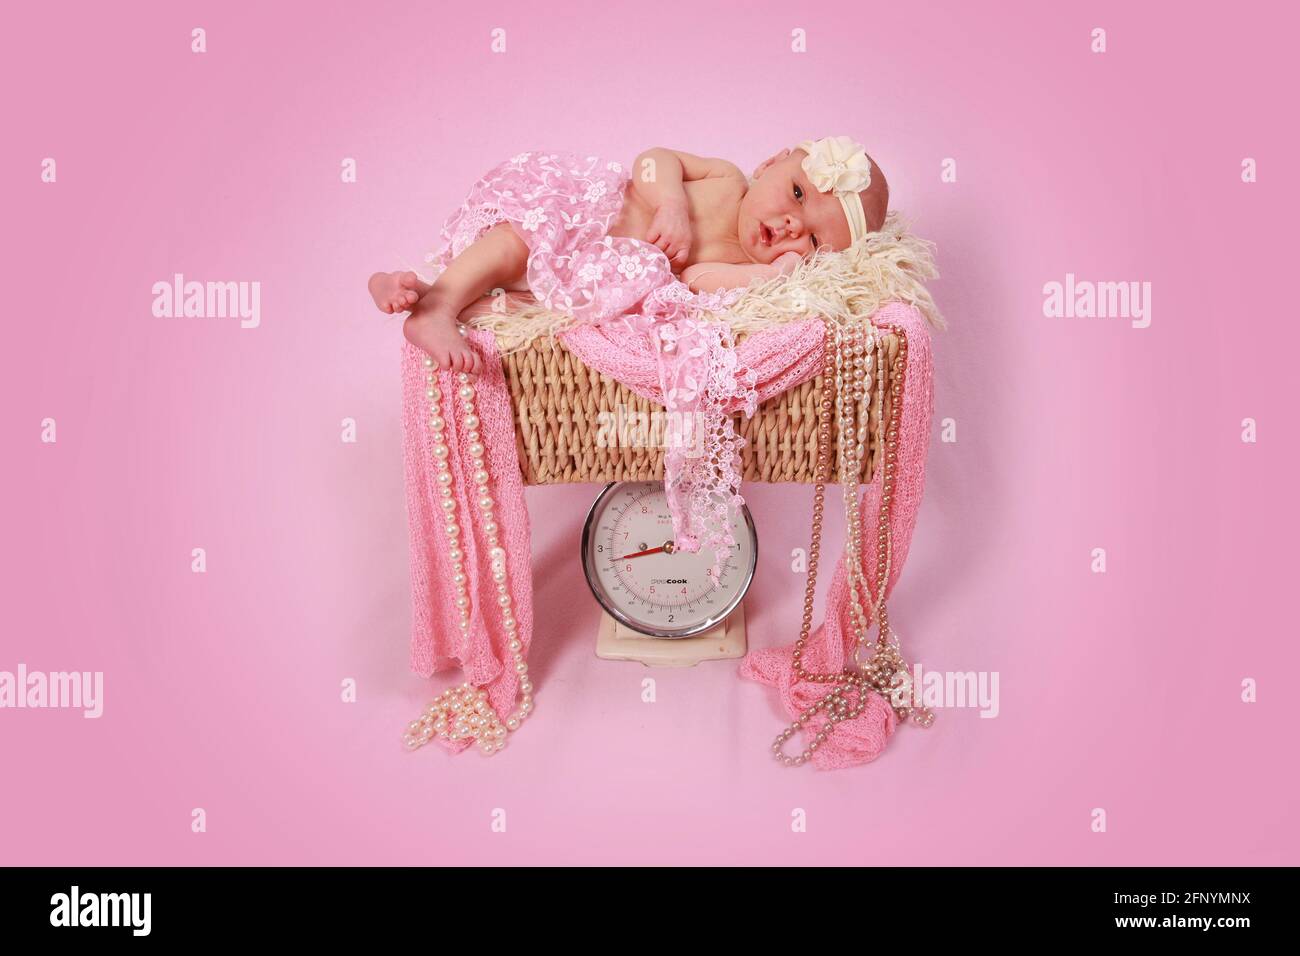 baby girl 10 days old asleep on baby scales, newborn baby Stock Photo